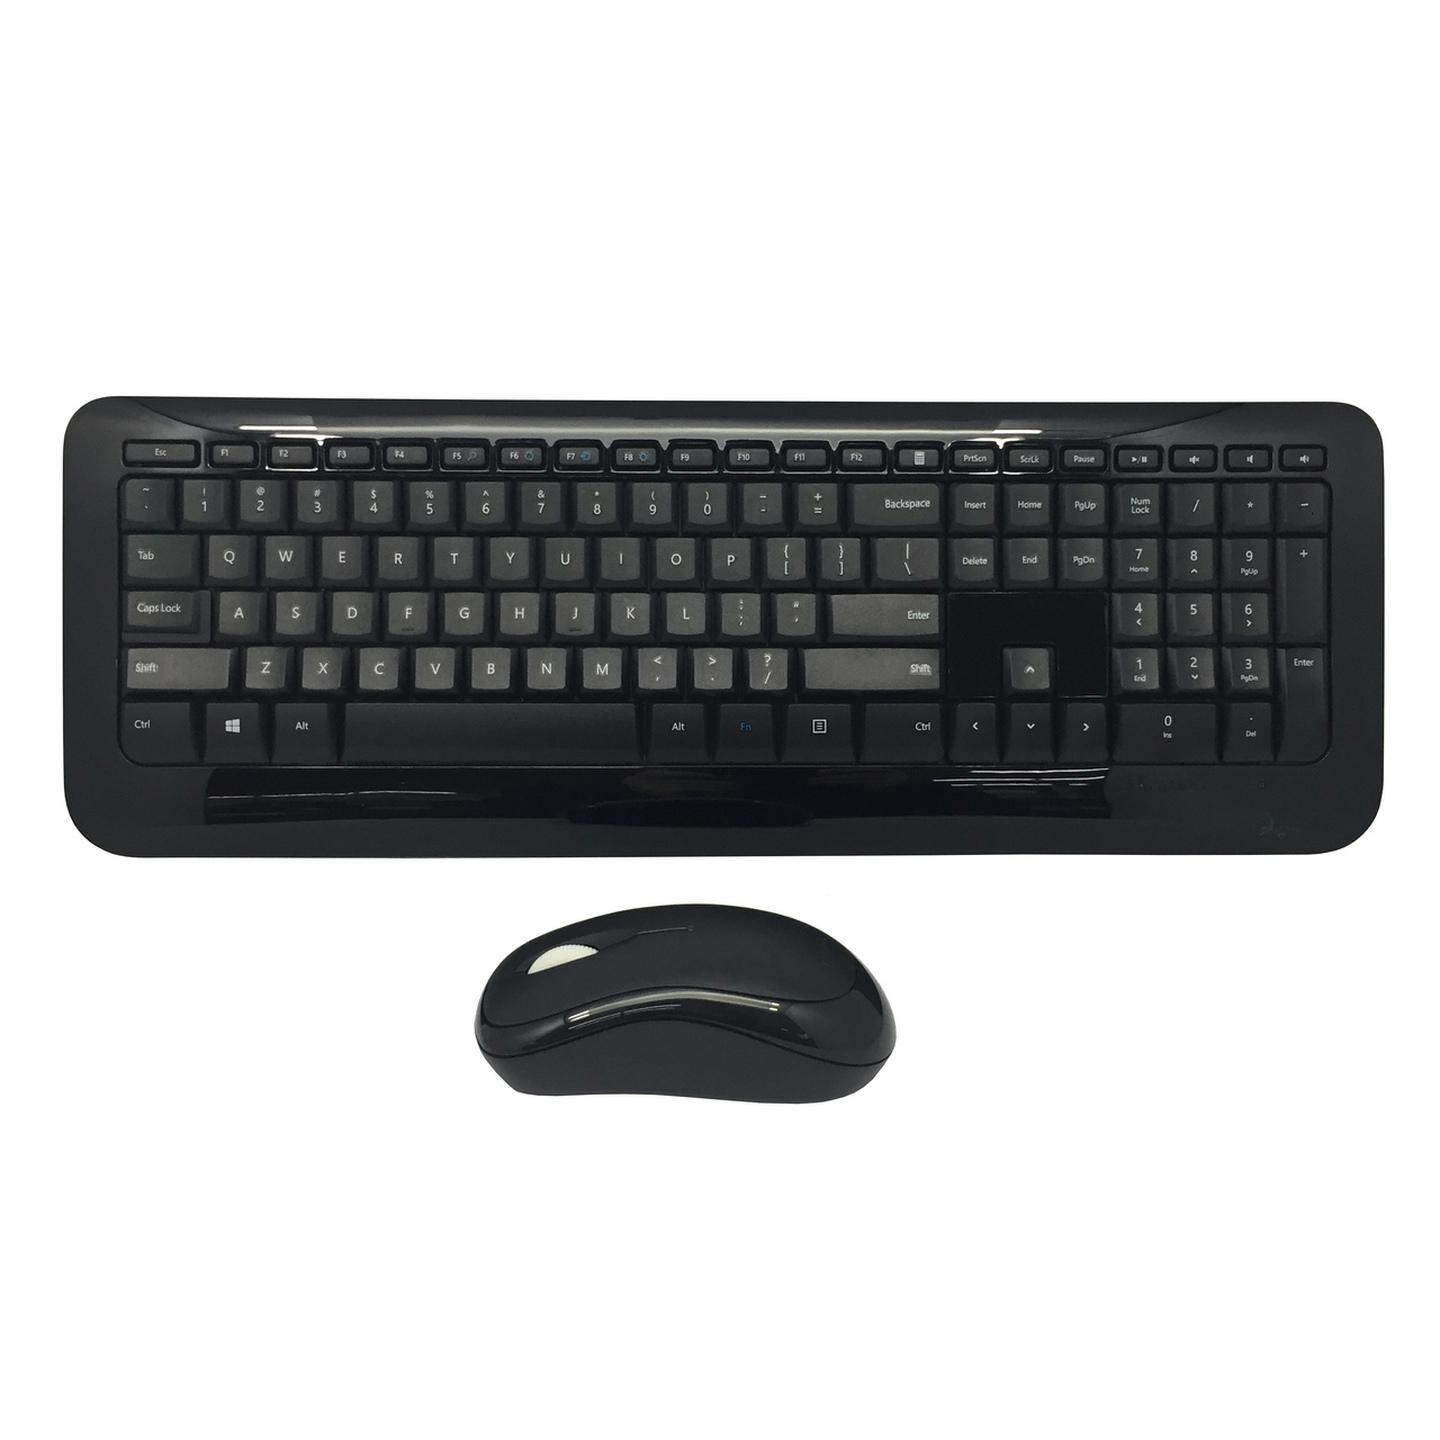 Microsoft 850 Wireless Desktop Keyboard and Mouse